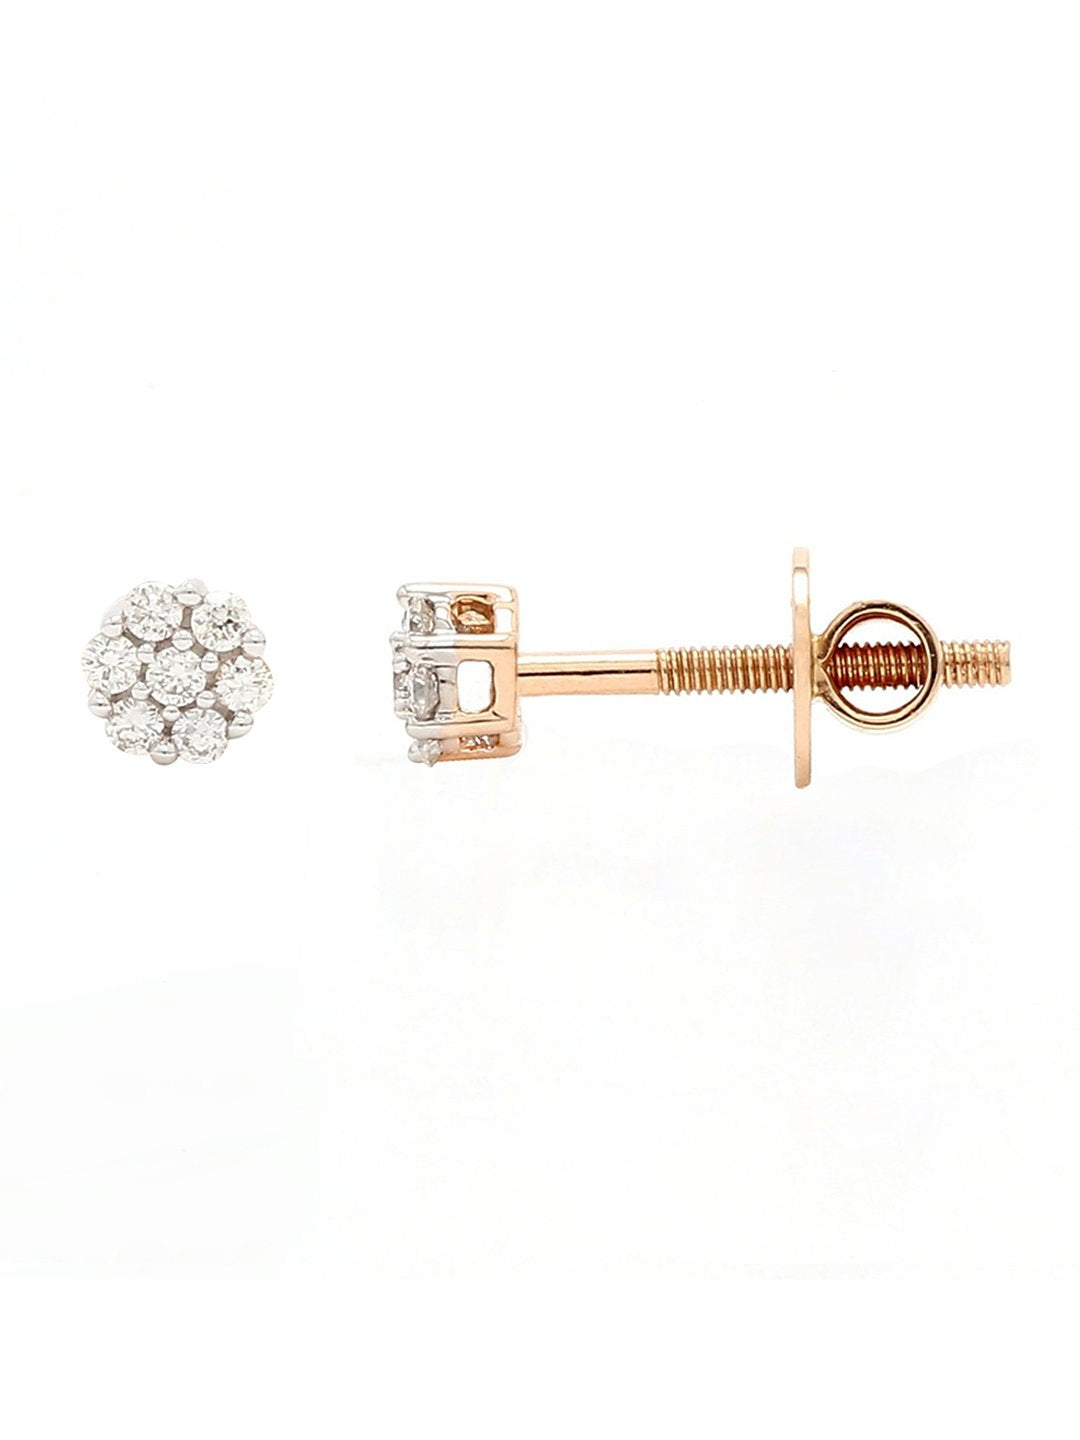 Real Diamond Cluster Stud Earring (Rose Gold) - Zest Mélange 